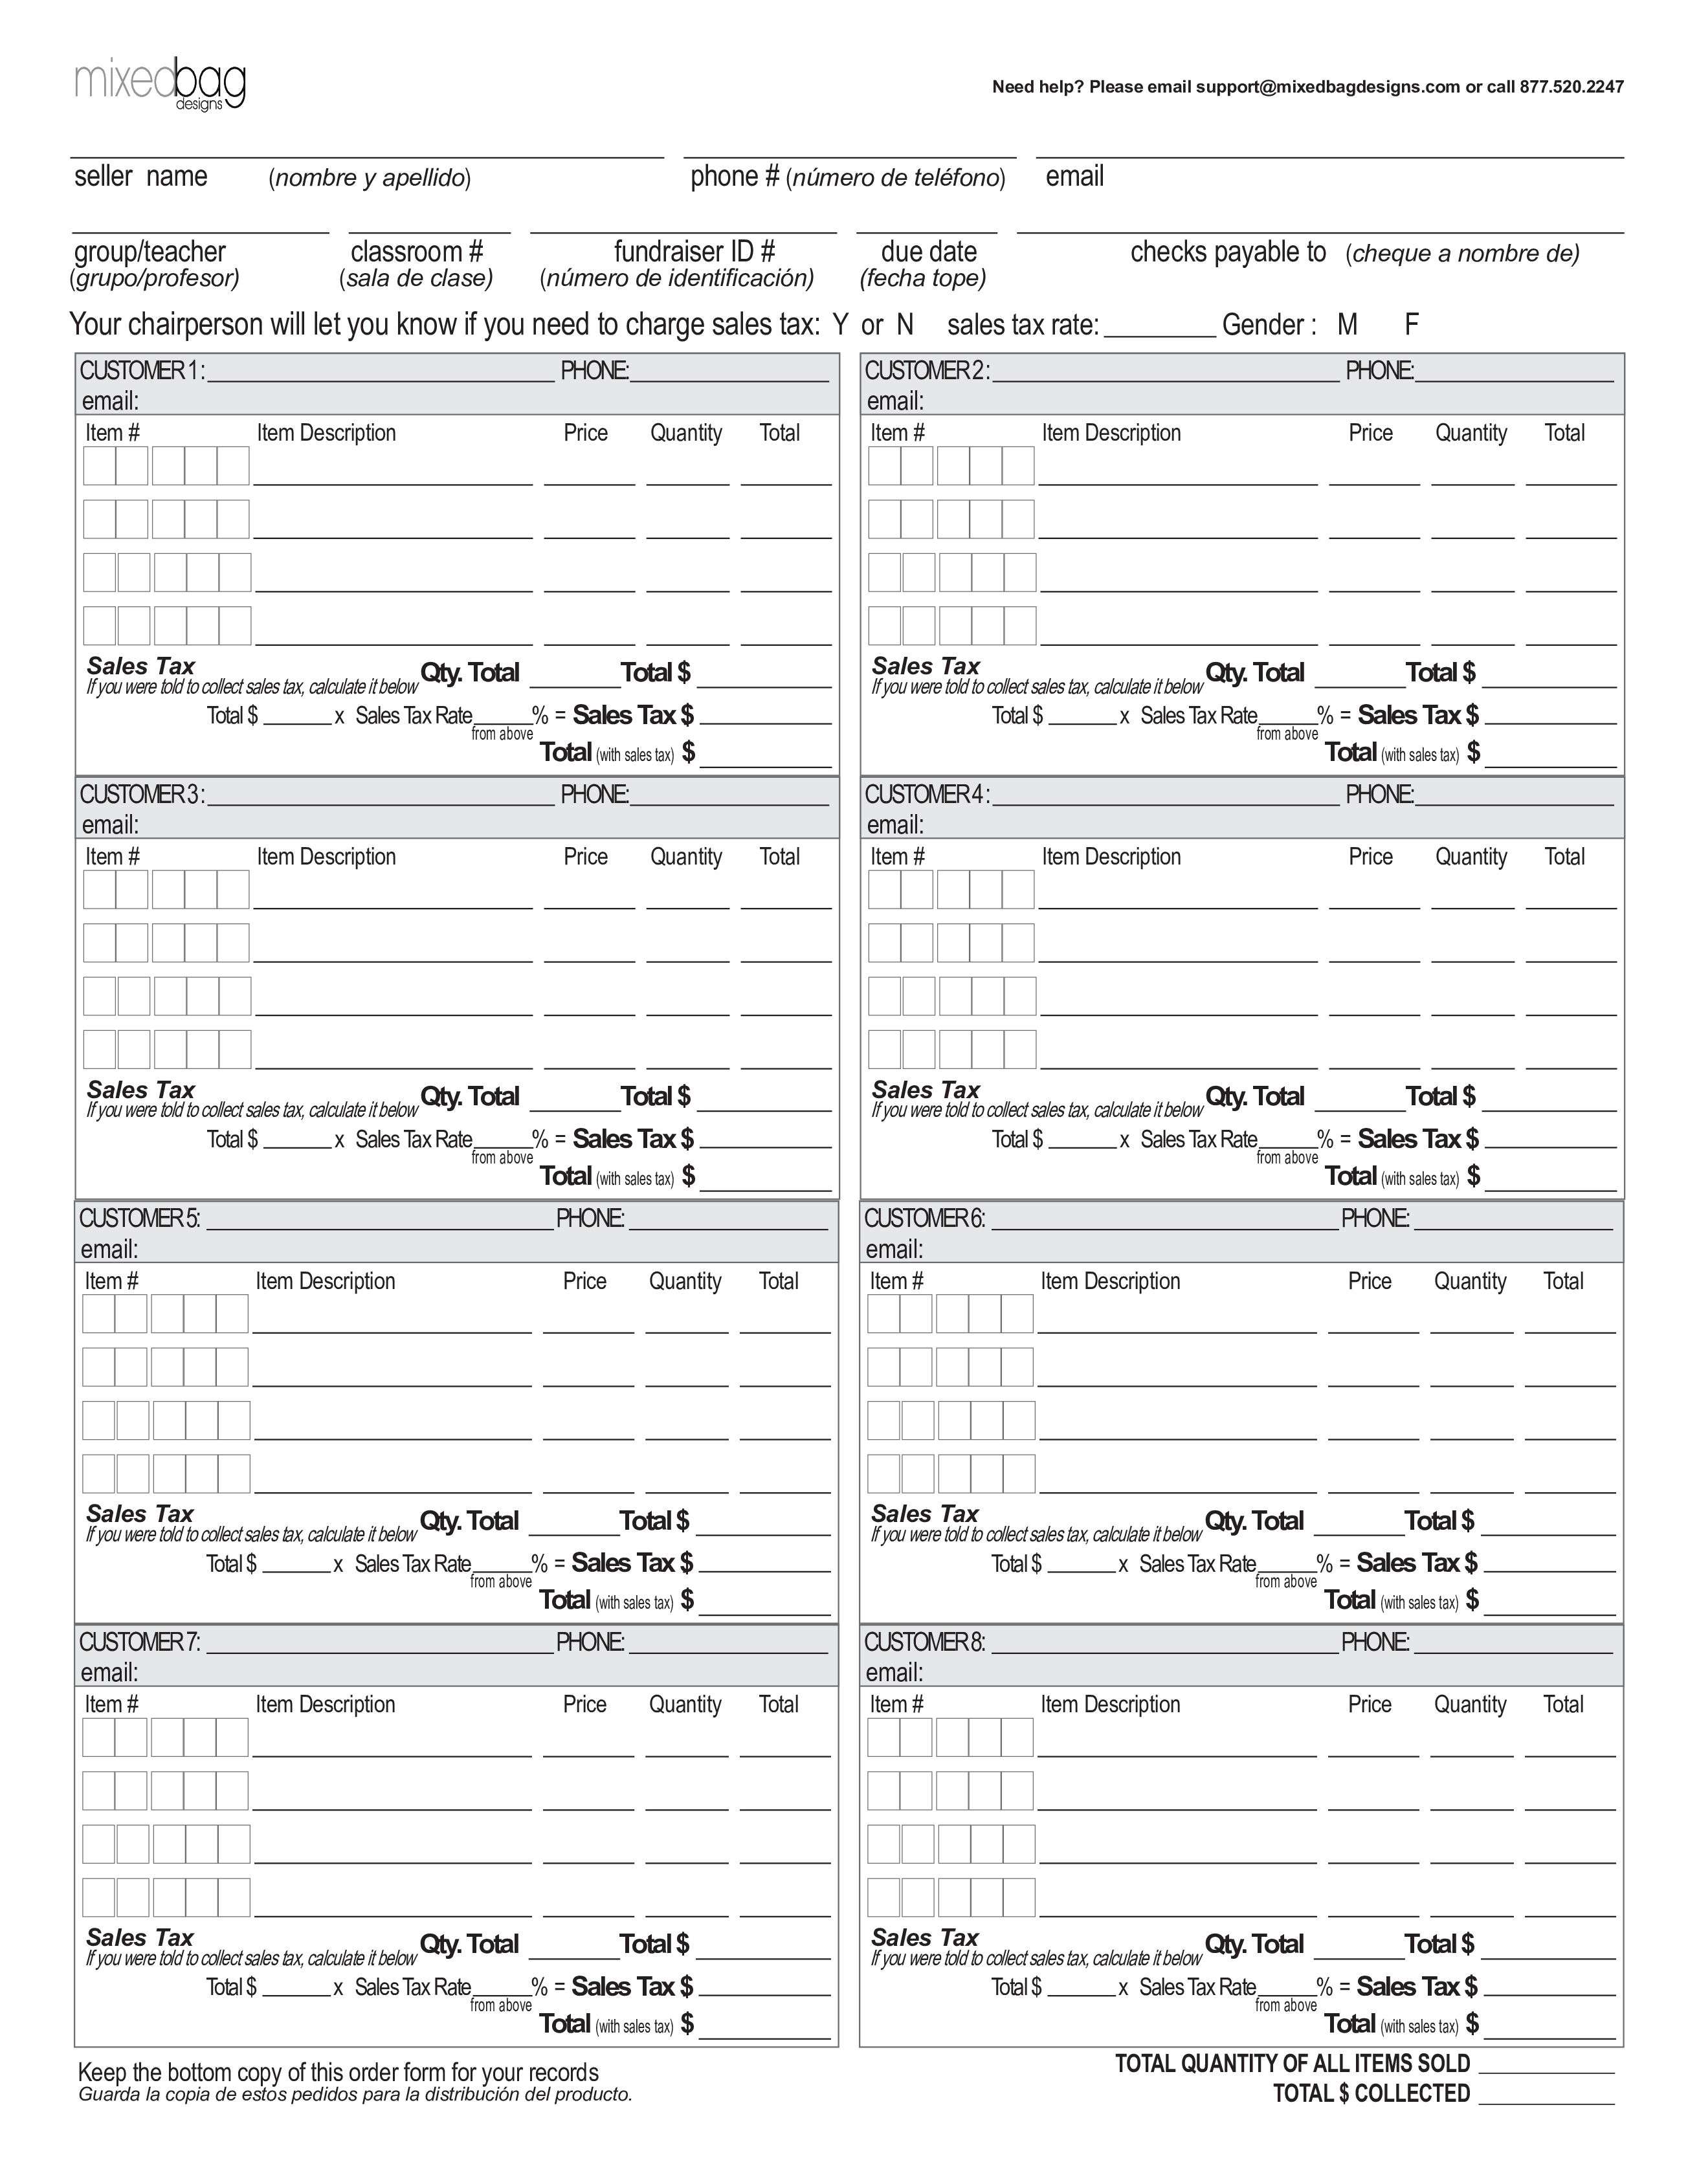 Student Order Form sheet main image